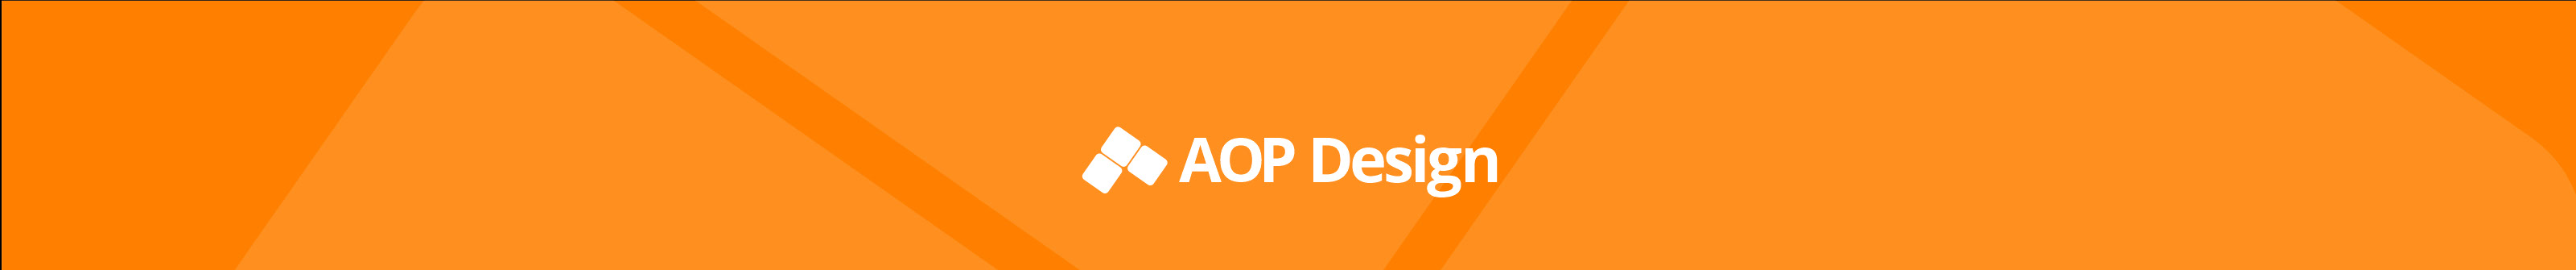 AOP Design's profile banner